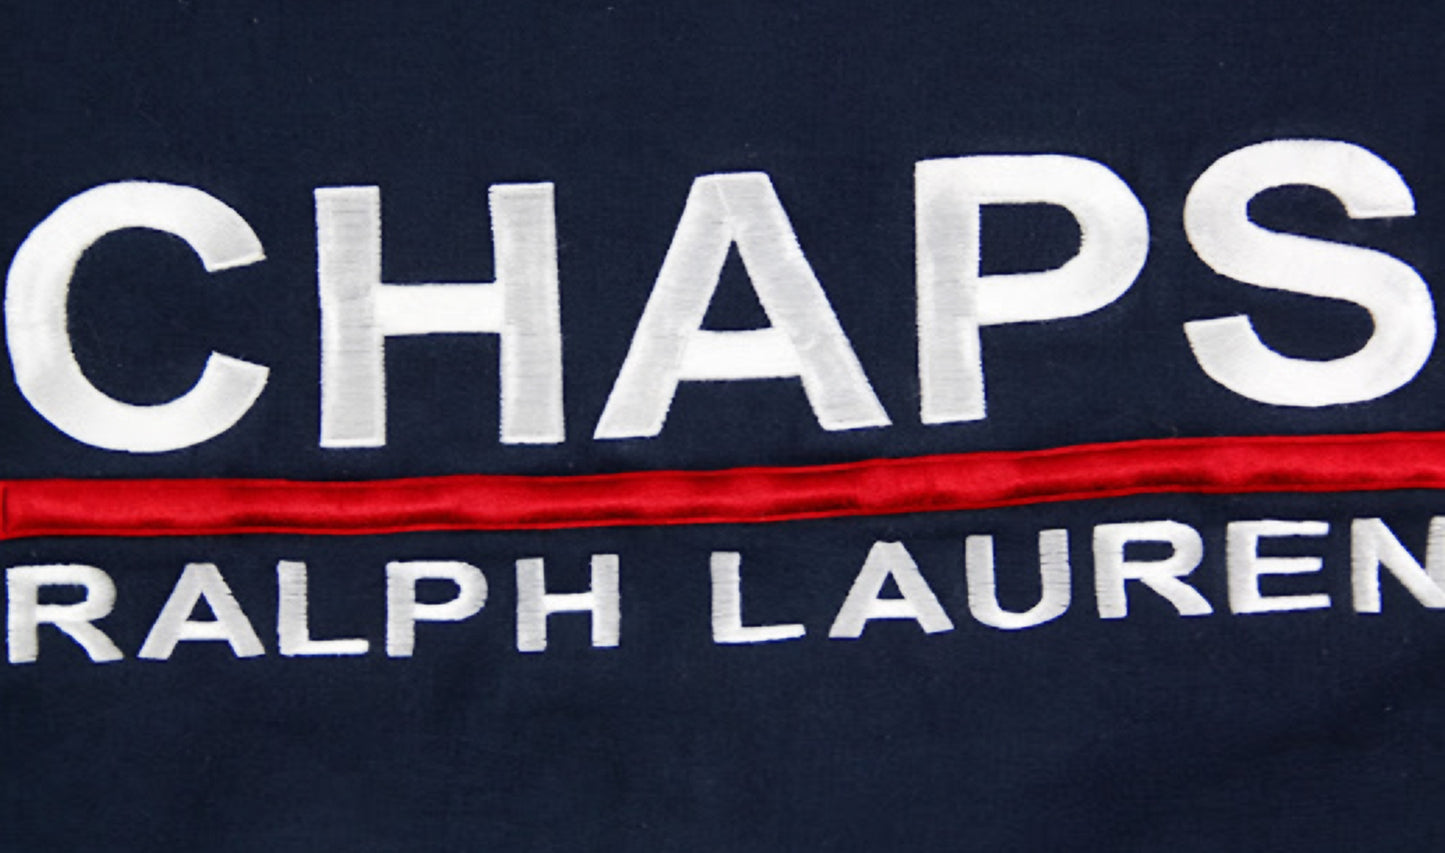 Chaps Ralph Lauren Vintage Spellout Sweater